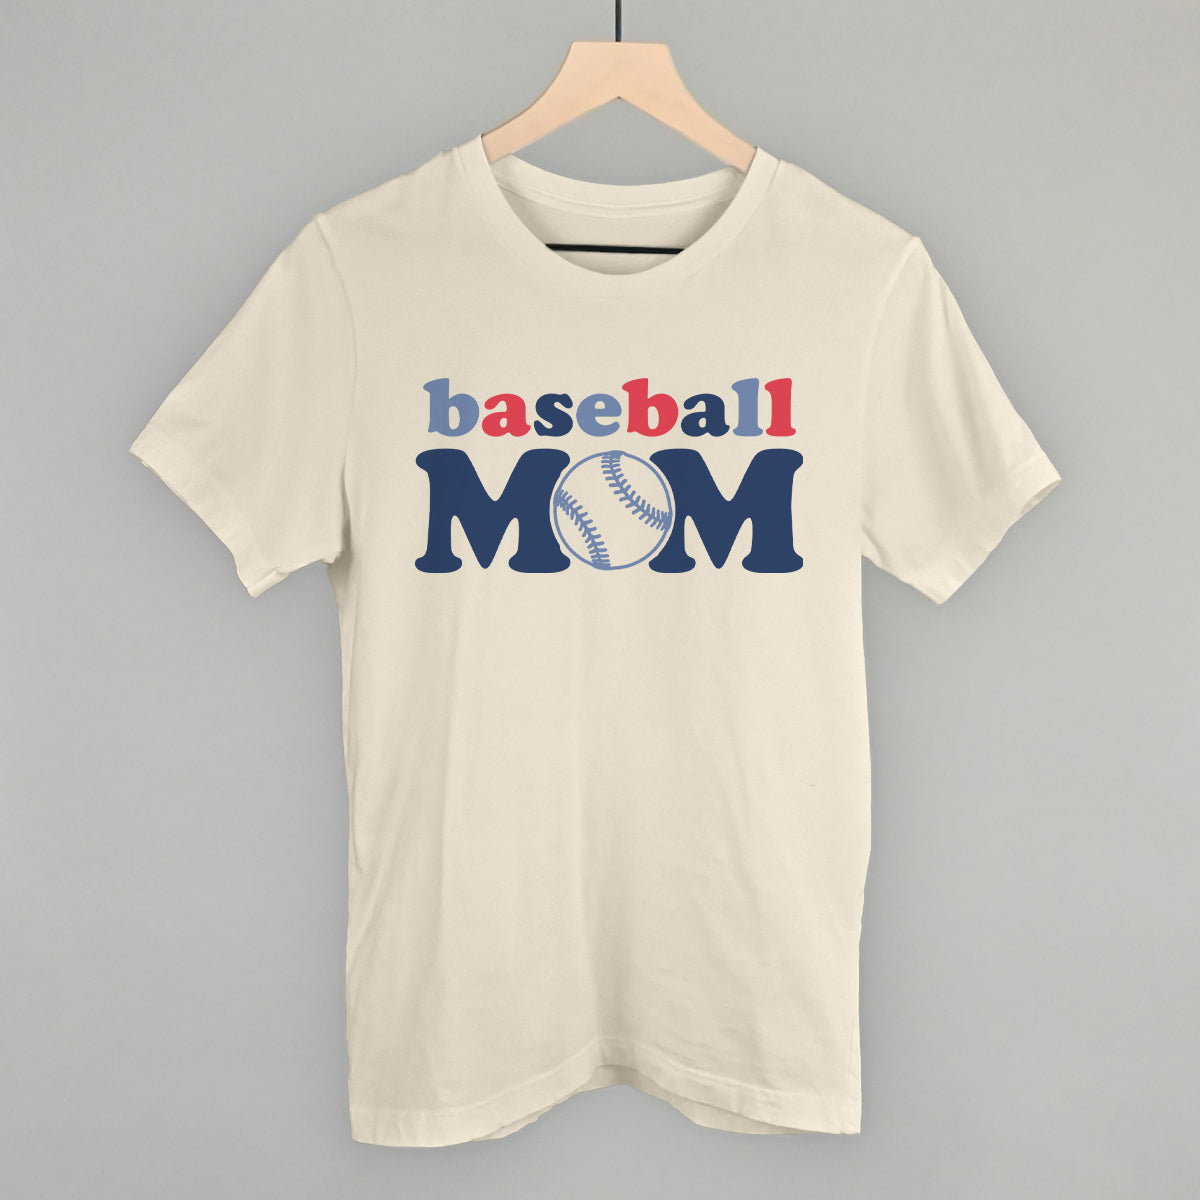 Baseball Mom (Multi)